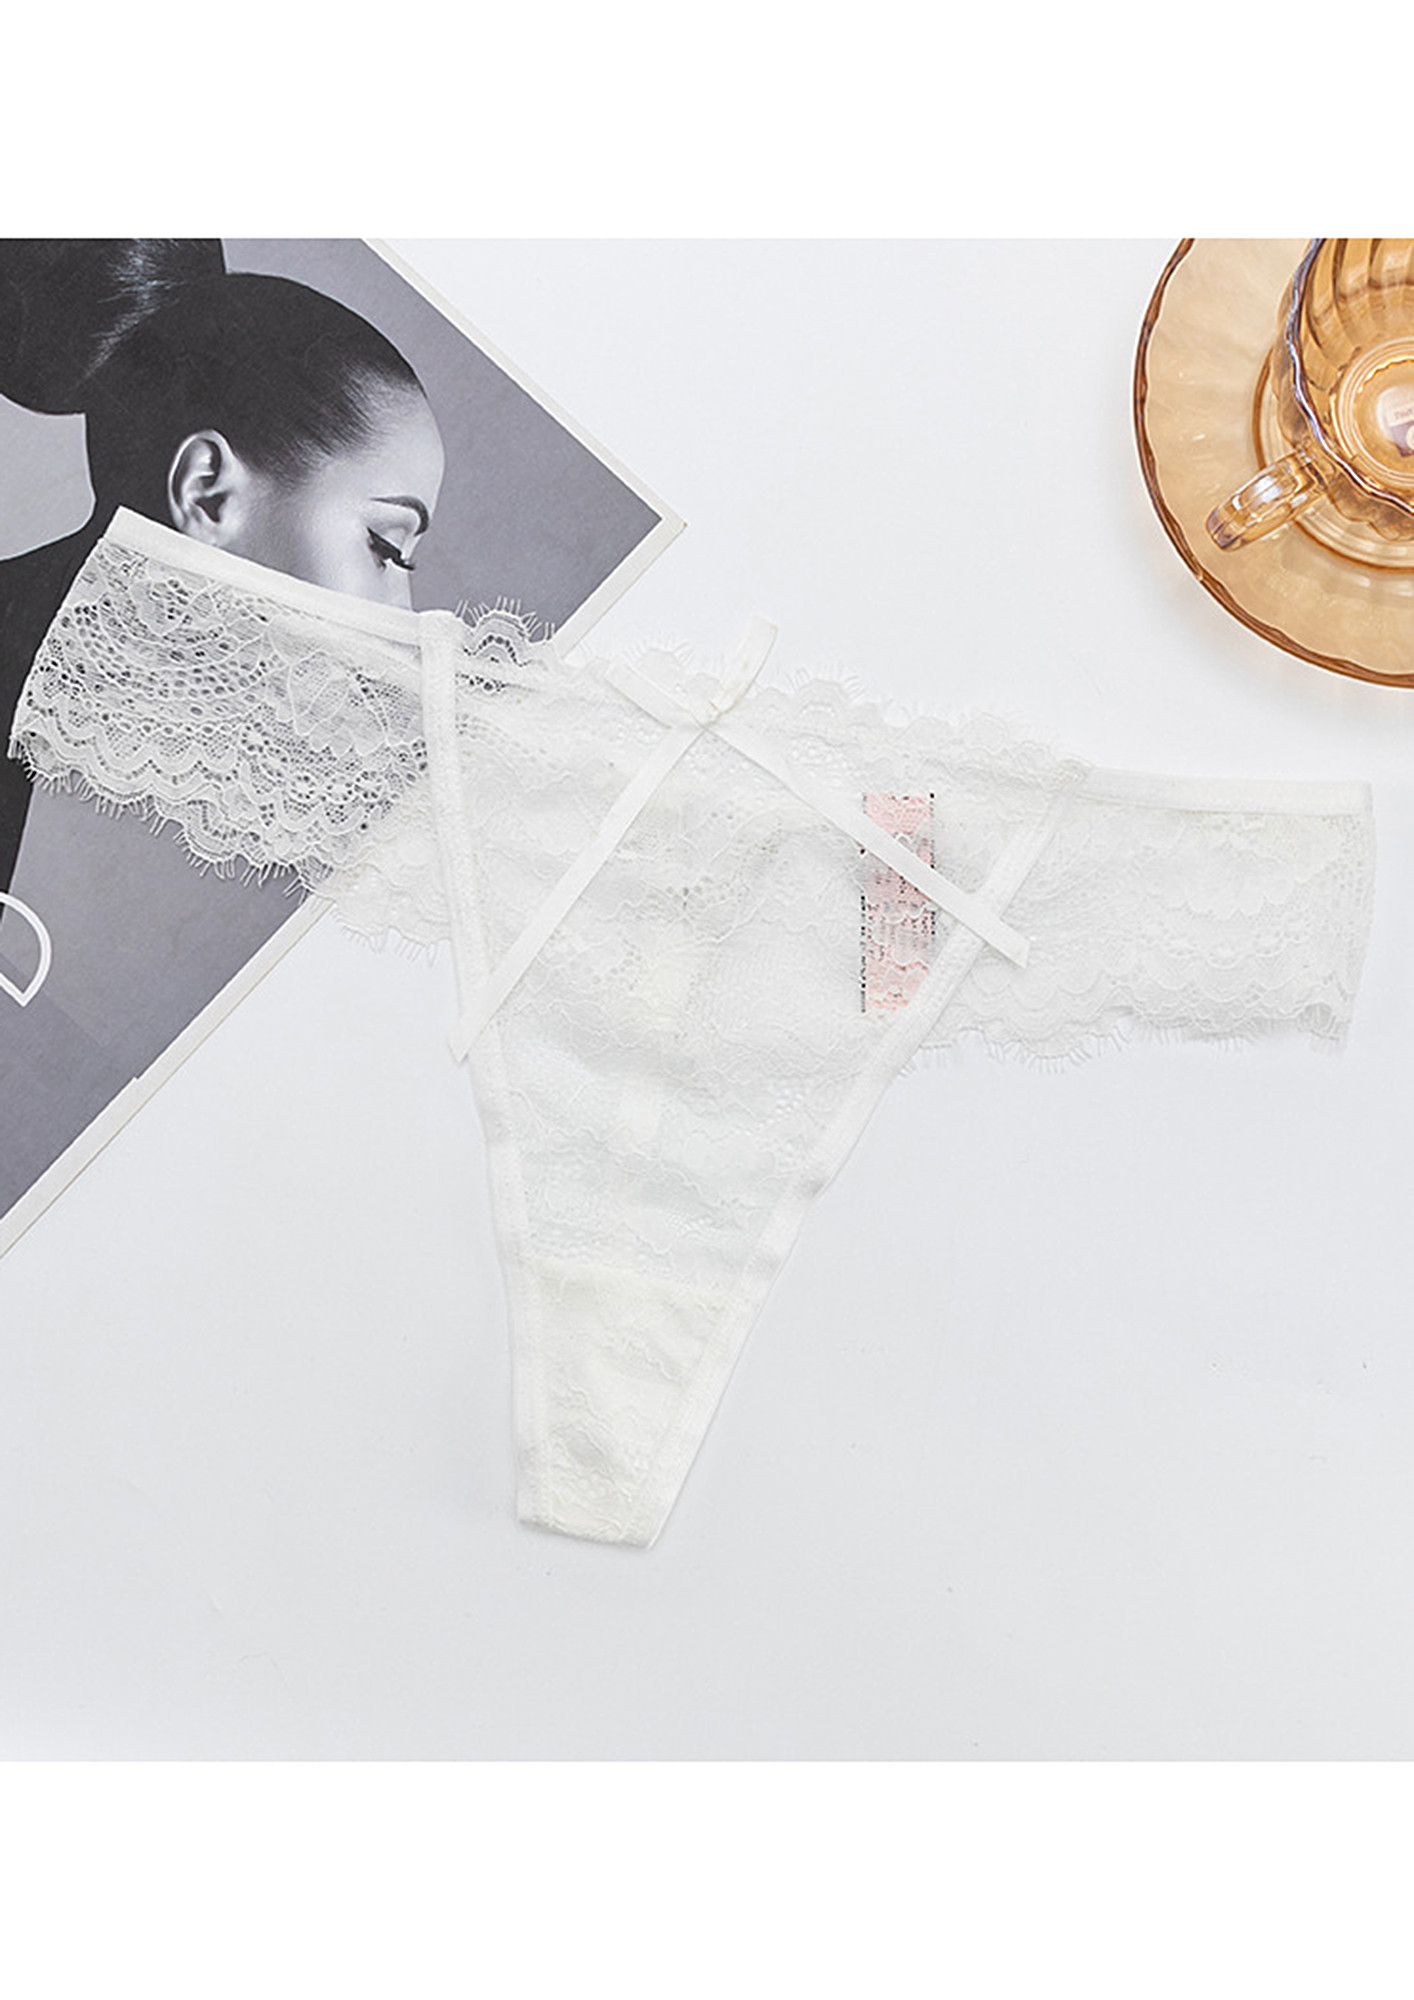 Buy Underwear Women Transparent Online In India -  India